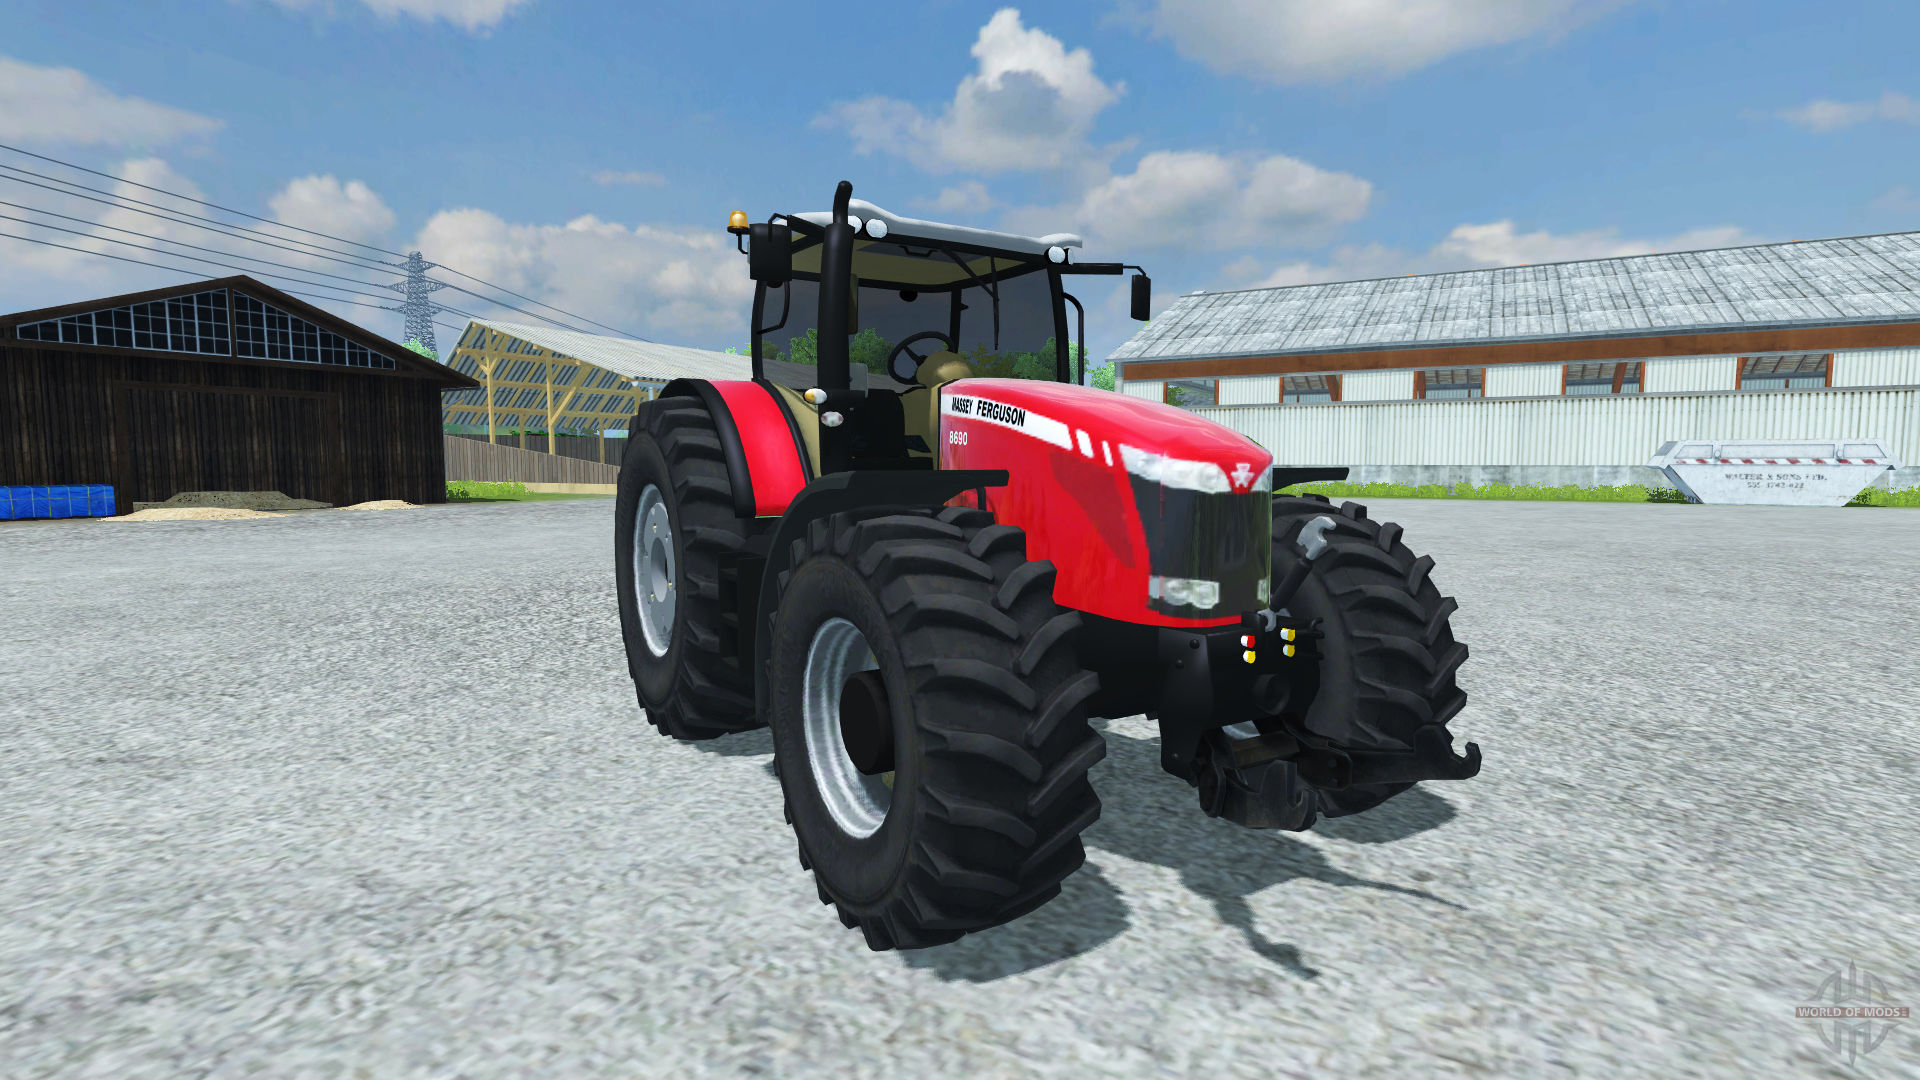 Massey Ferguson 8690 v2.1 for Farming Simulator 2013